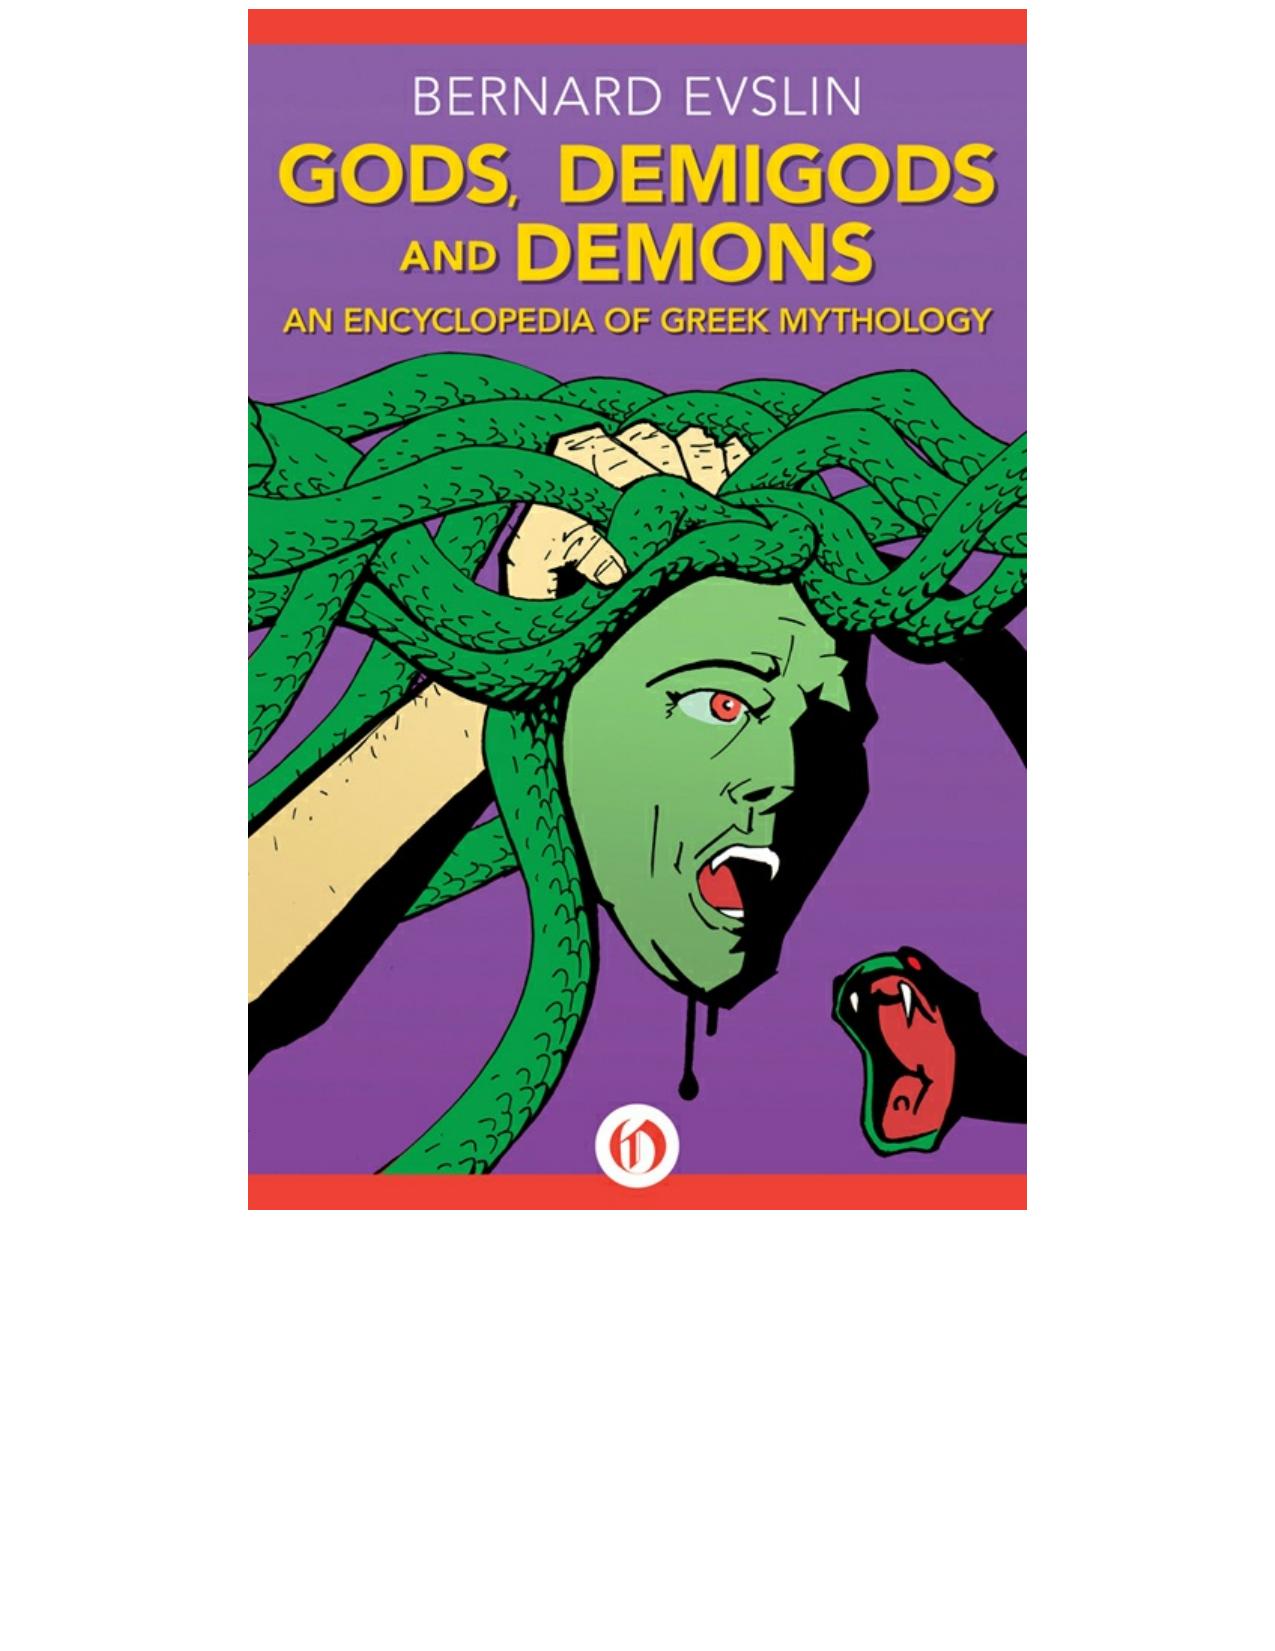 Gods, Demigods and Demons by Bernard Evslin